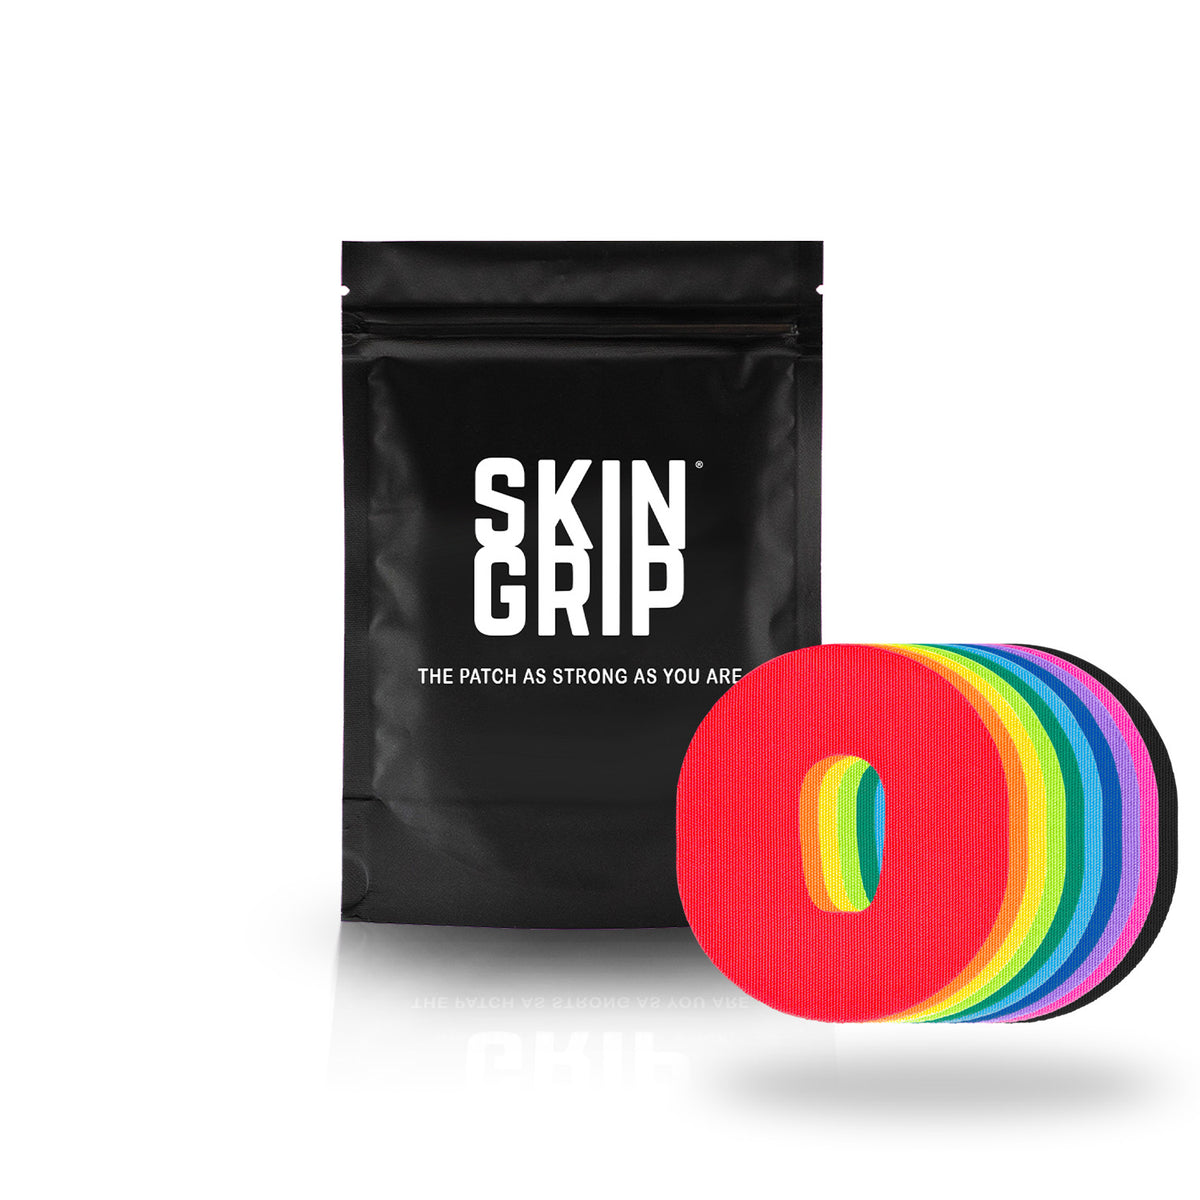 White Underlay Patch For Sensitive Skin - Dexcom G6